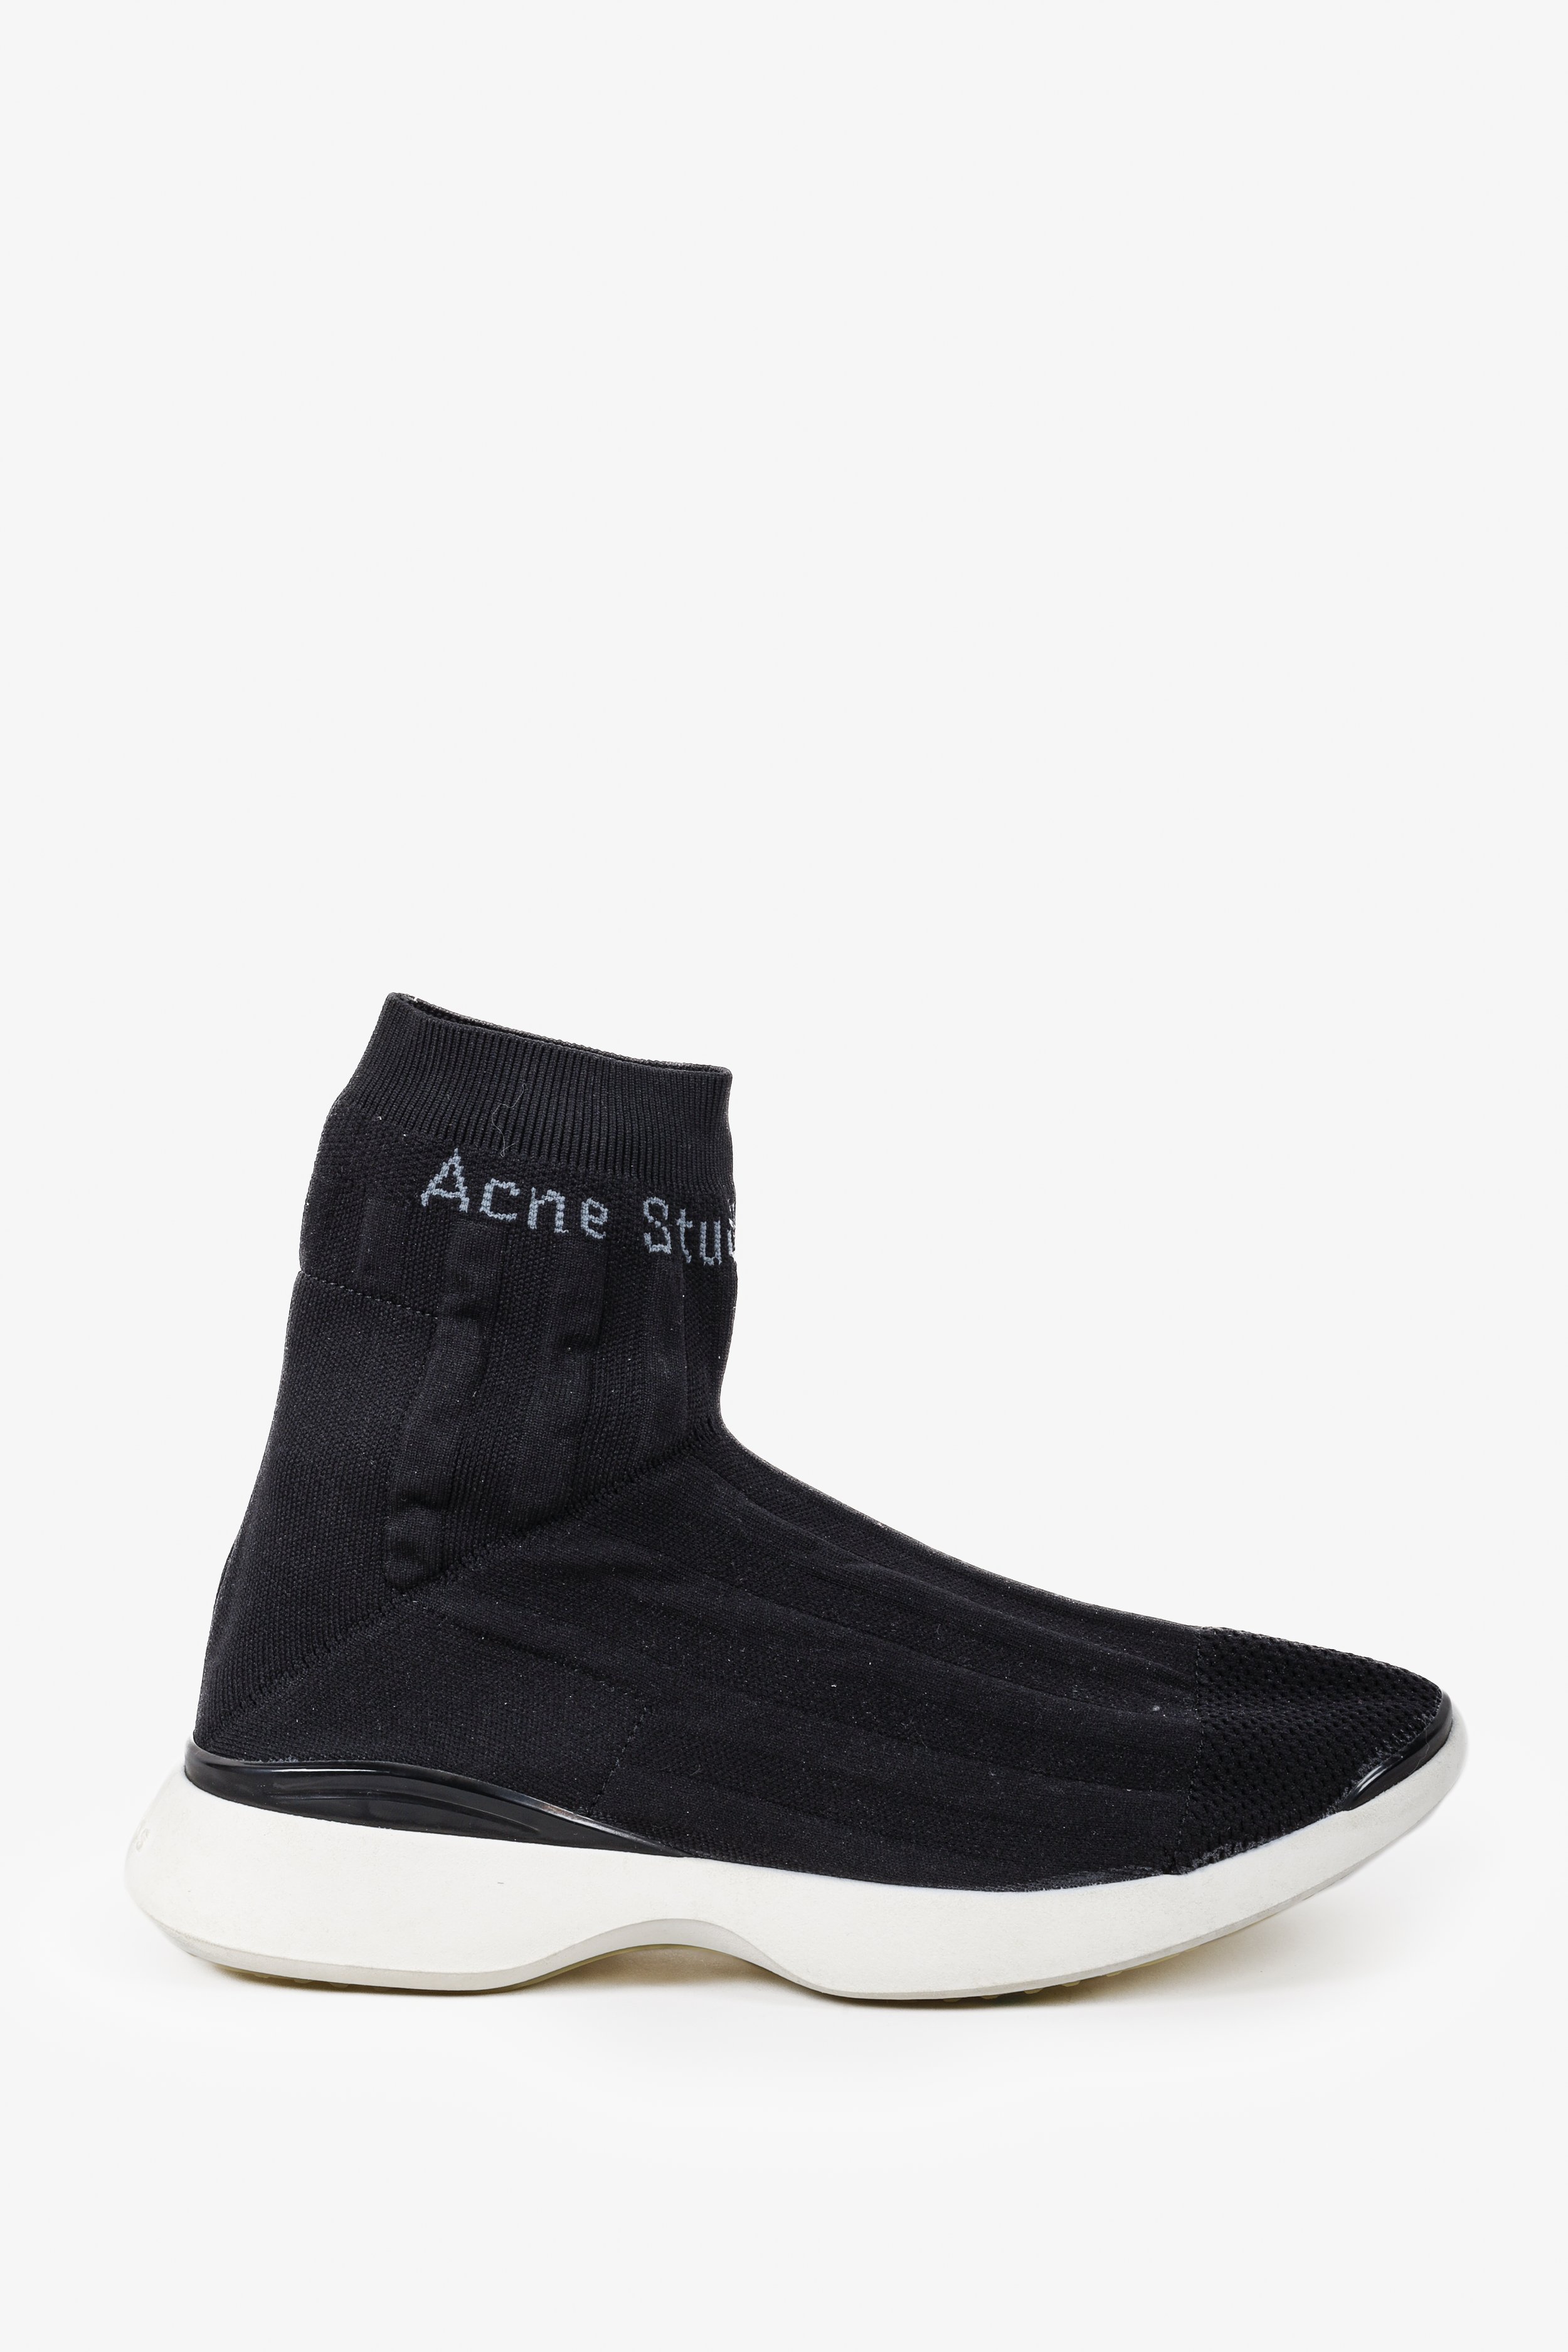 ACNE STUDIOS: canvas sneakers - Black | ACNE STUDIOS sneakers AD0519 online  at GIGLIO.COM